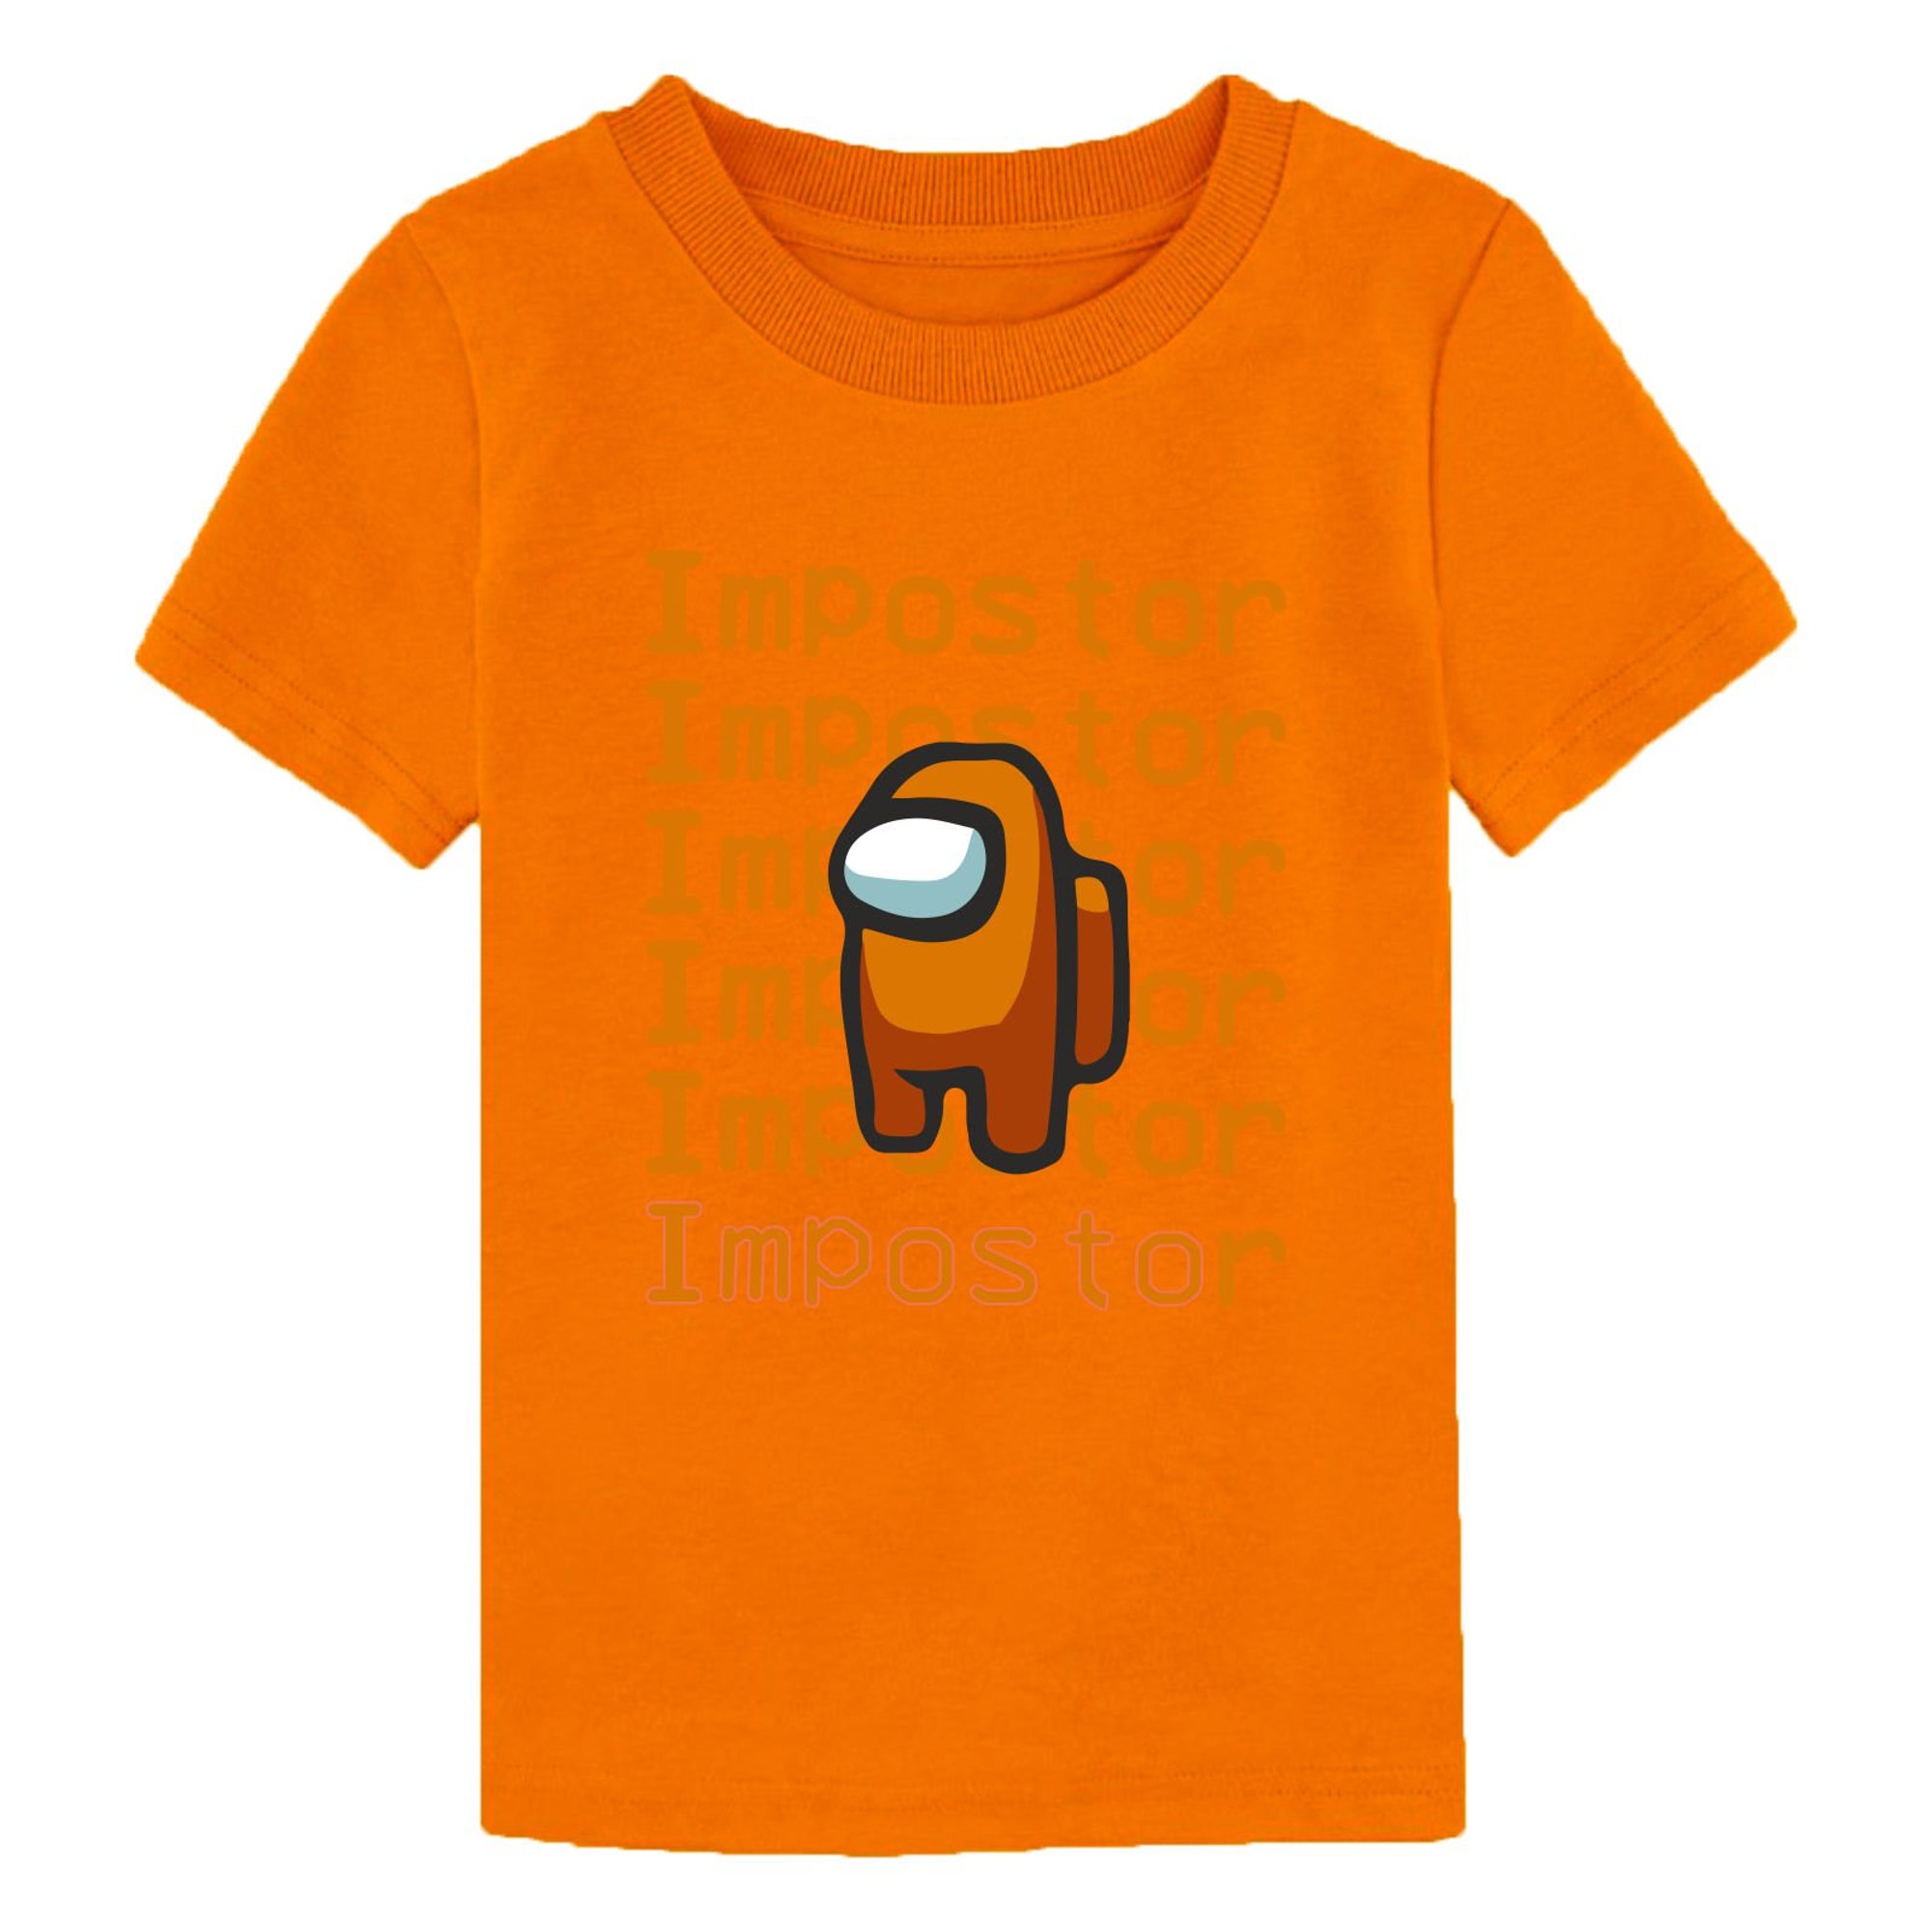 Discover Impostor Gaming T Shirt Among Us Gamer Birthday Christmas Party Boys Girls Kids Top Gift